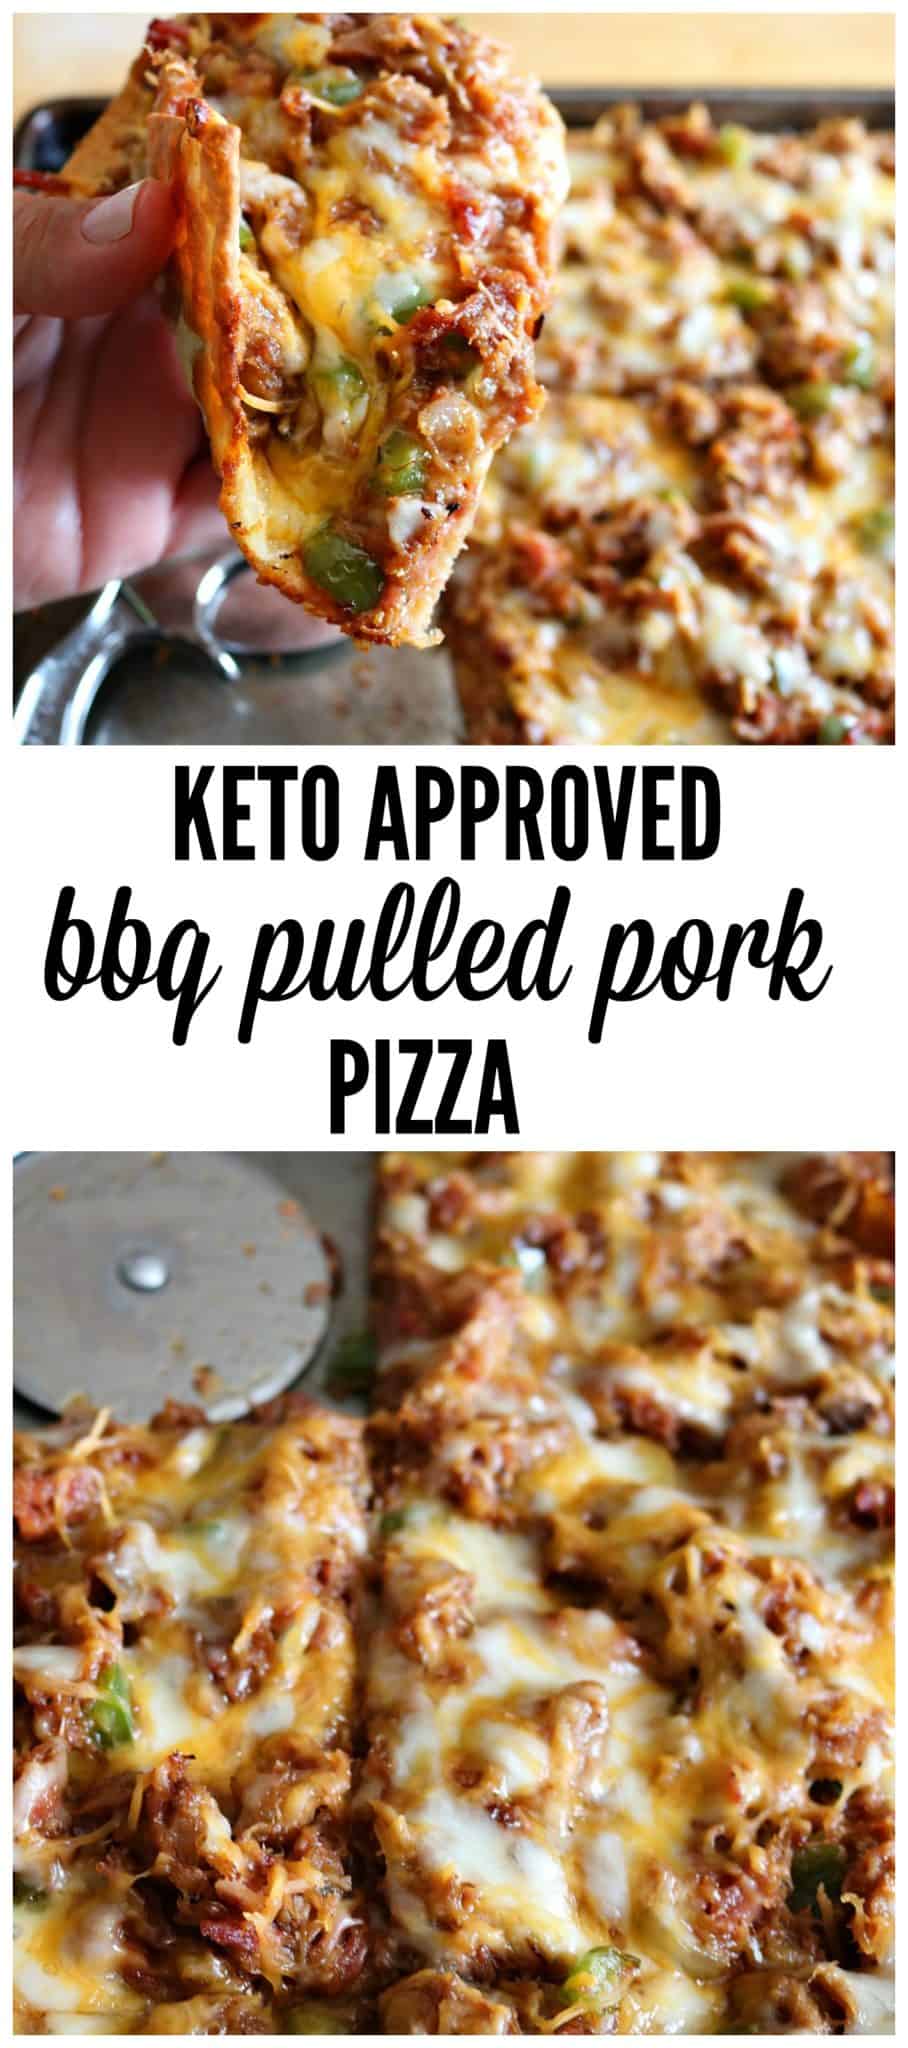 keto fathead pizza bbq pulled pork